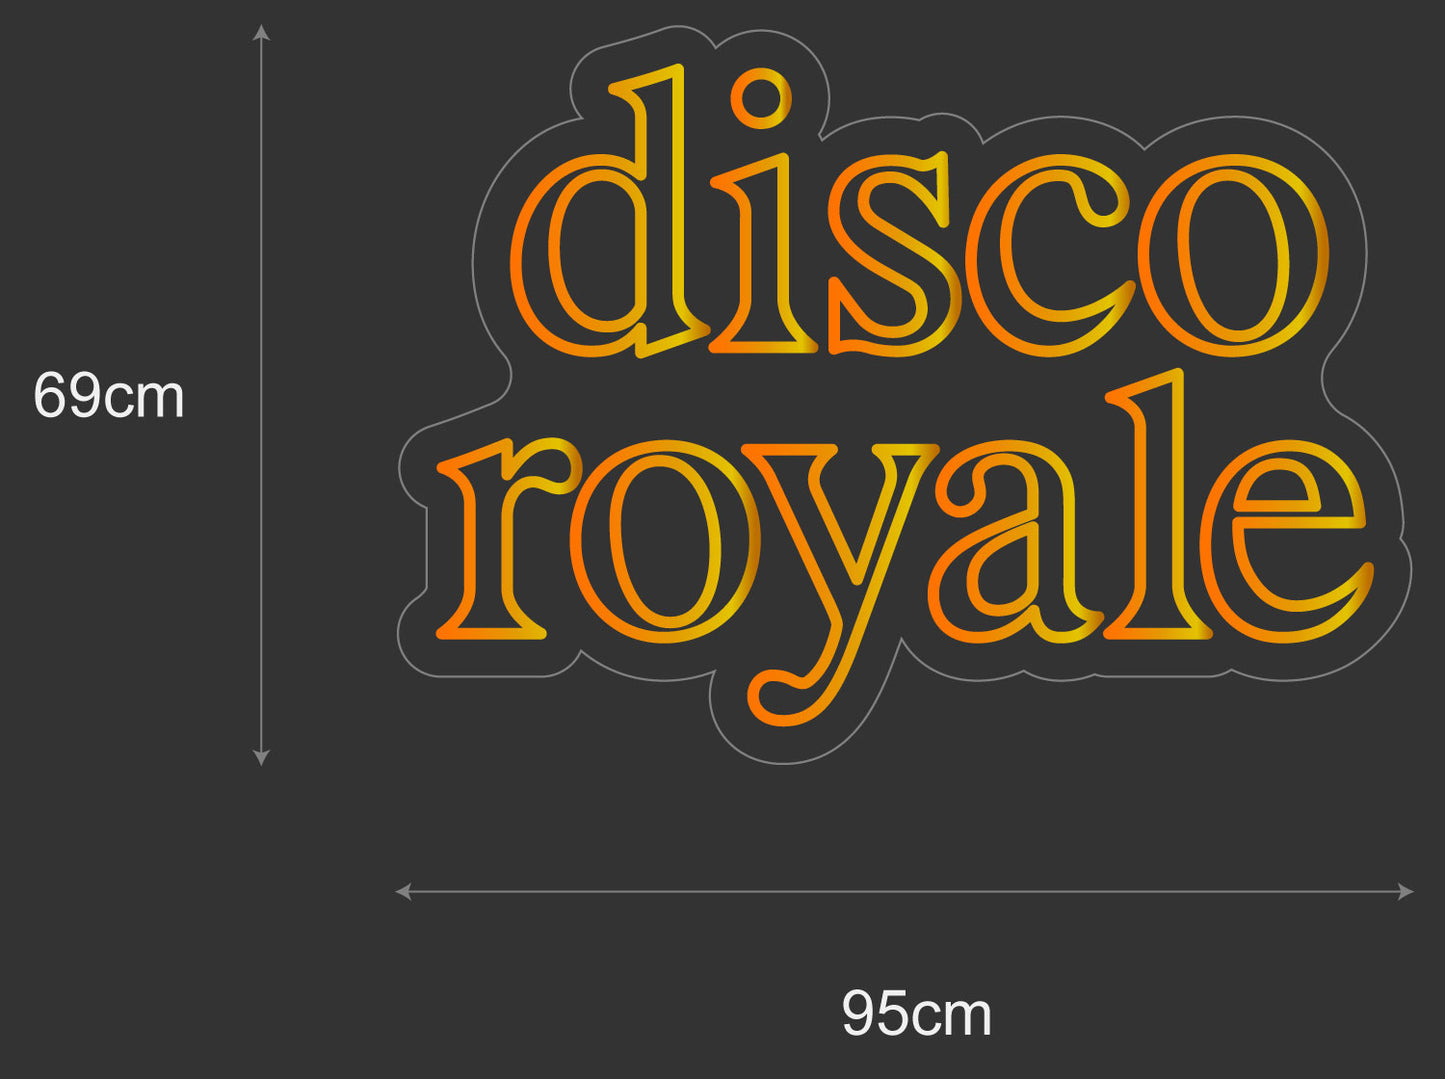 PowerLED Neon Sign (Indoor) -  Disco Royale